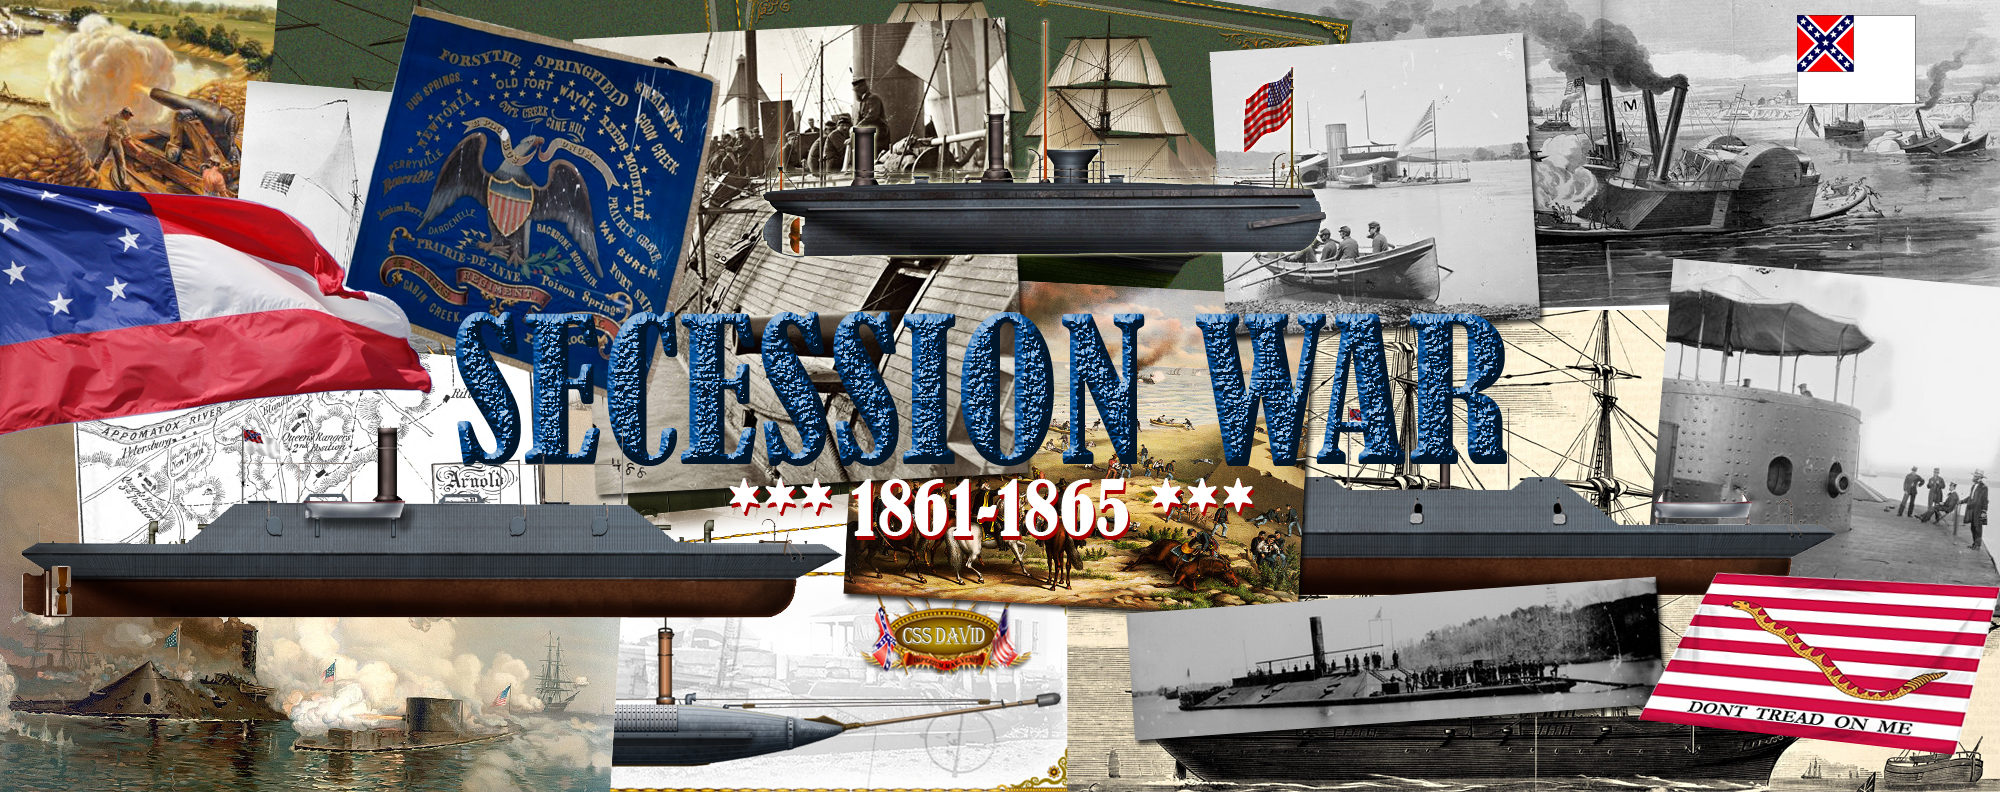 CSS Shenandoah American Civil War/ War Between the States themed Yard Flag